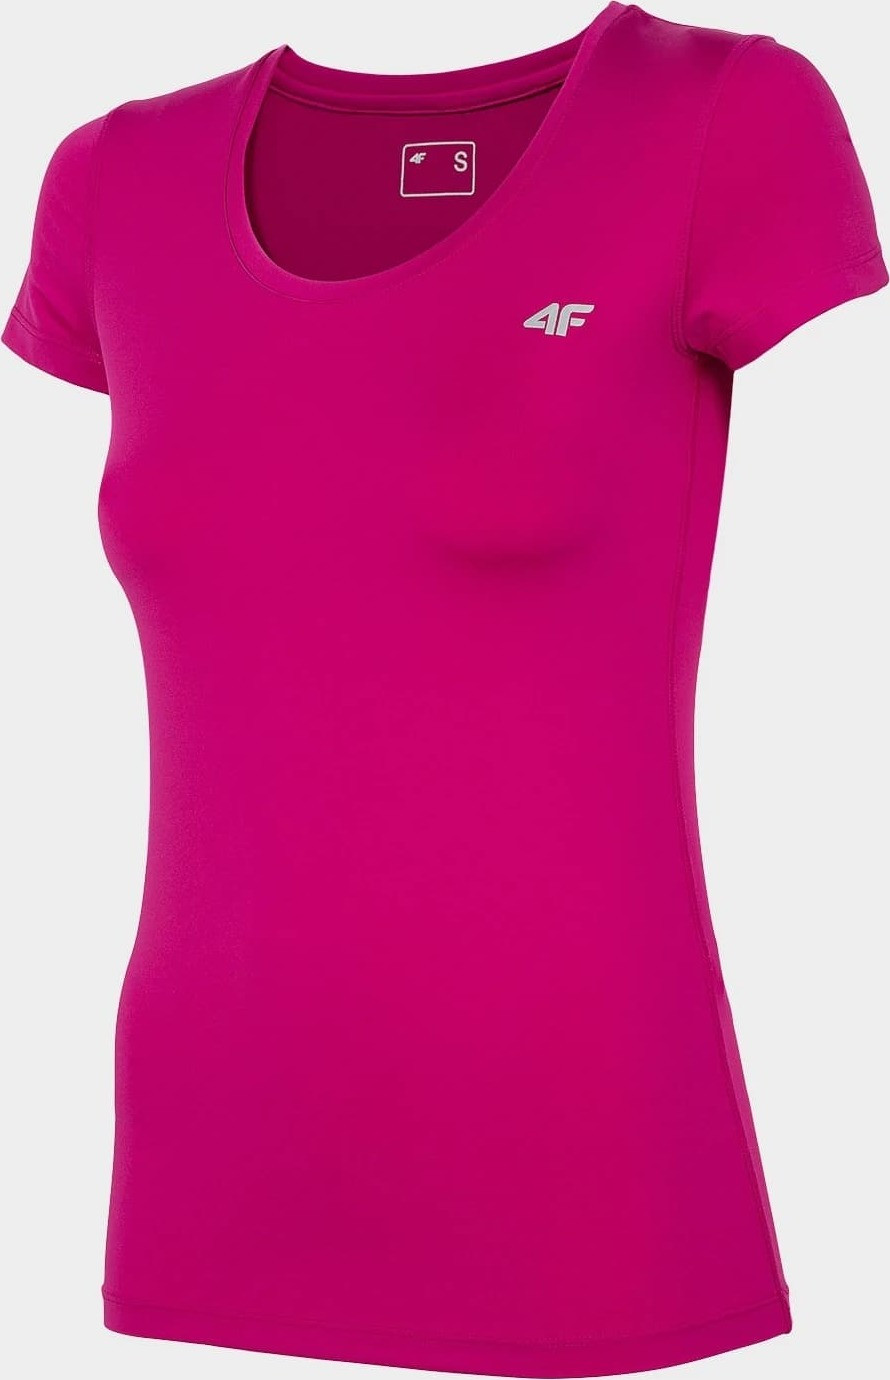 Dámské tričko 4F TSDF002 Růžové pink solid XS